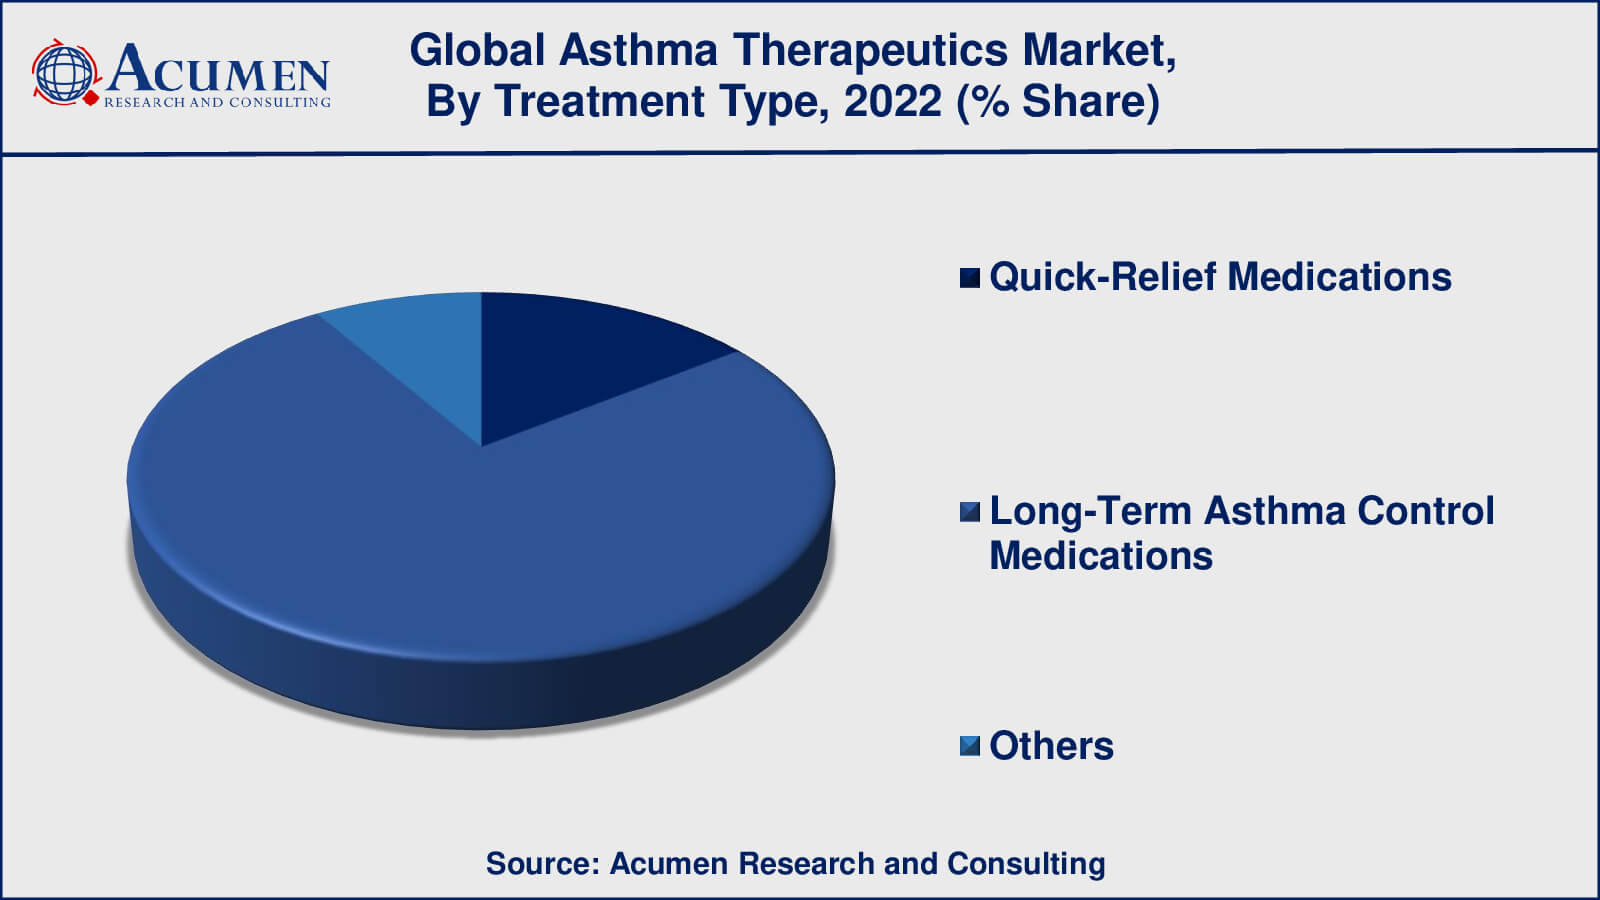 Asthma Therapeutics Market Drivers